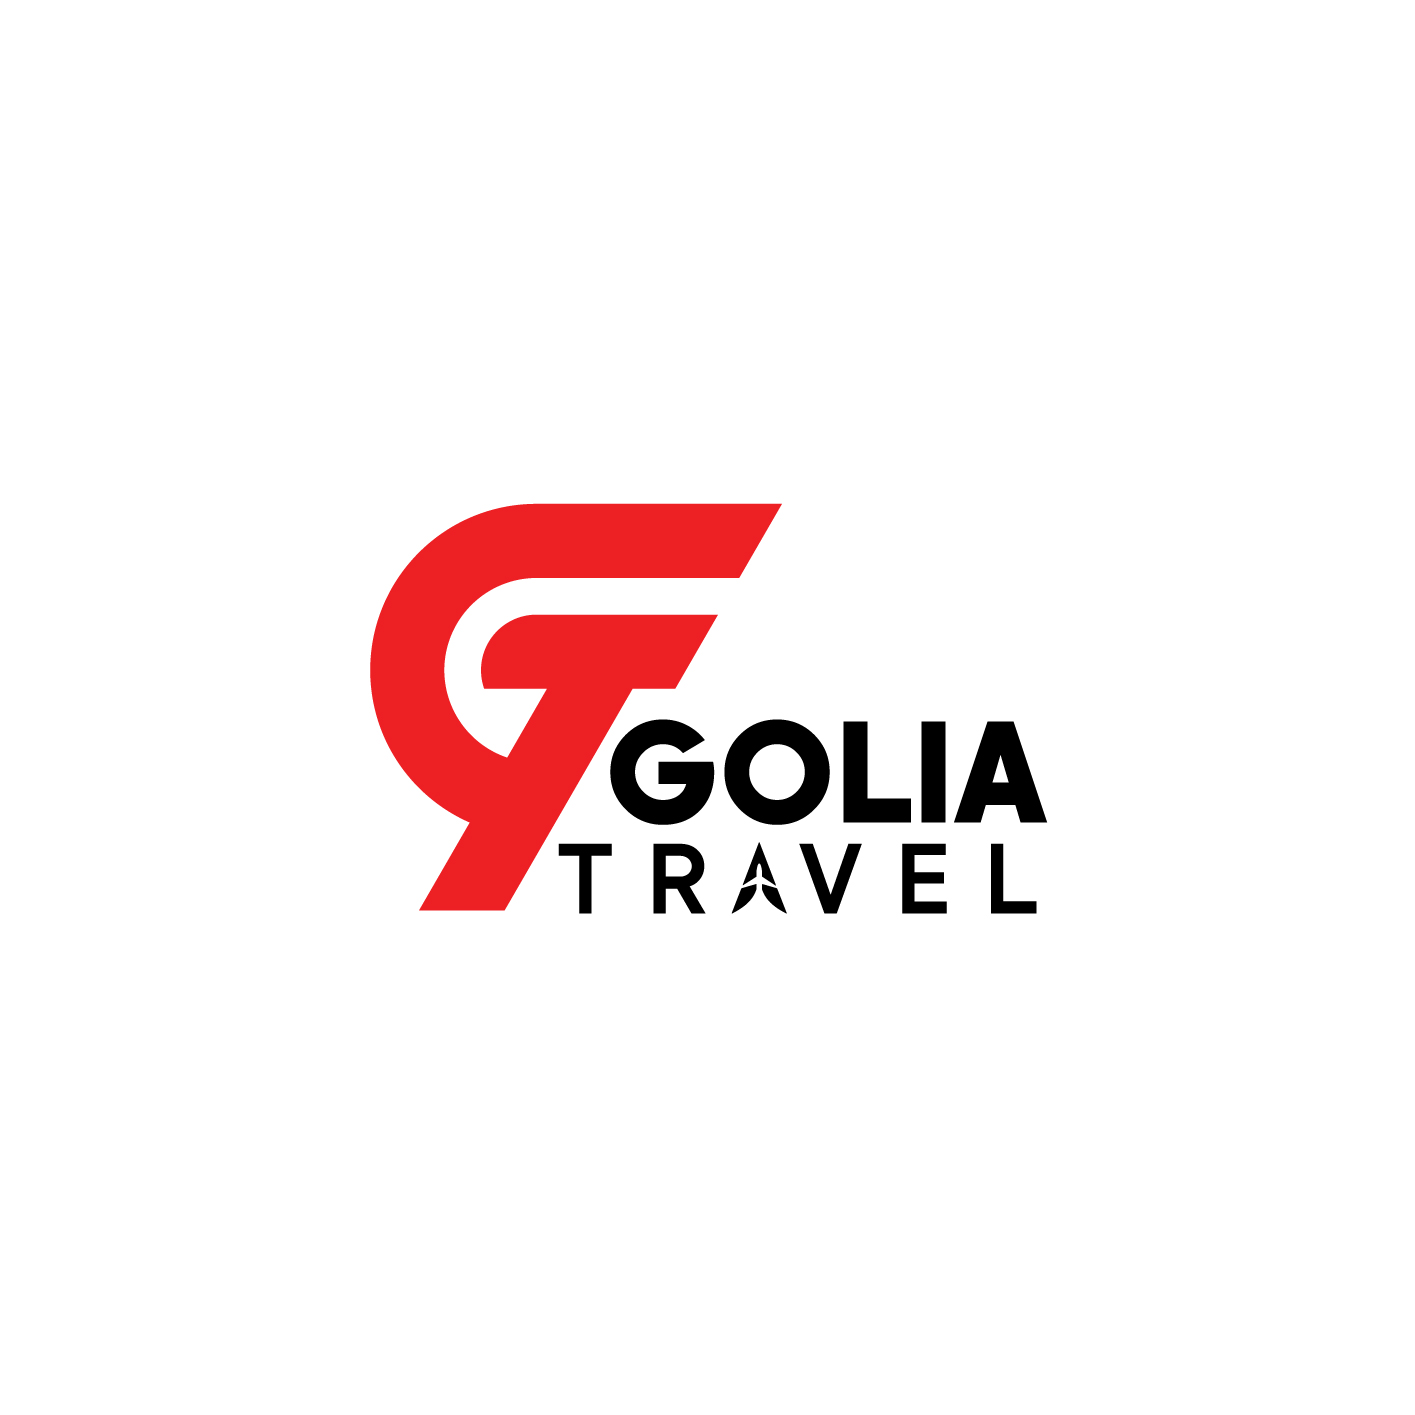 Golia travel